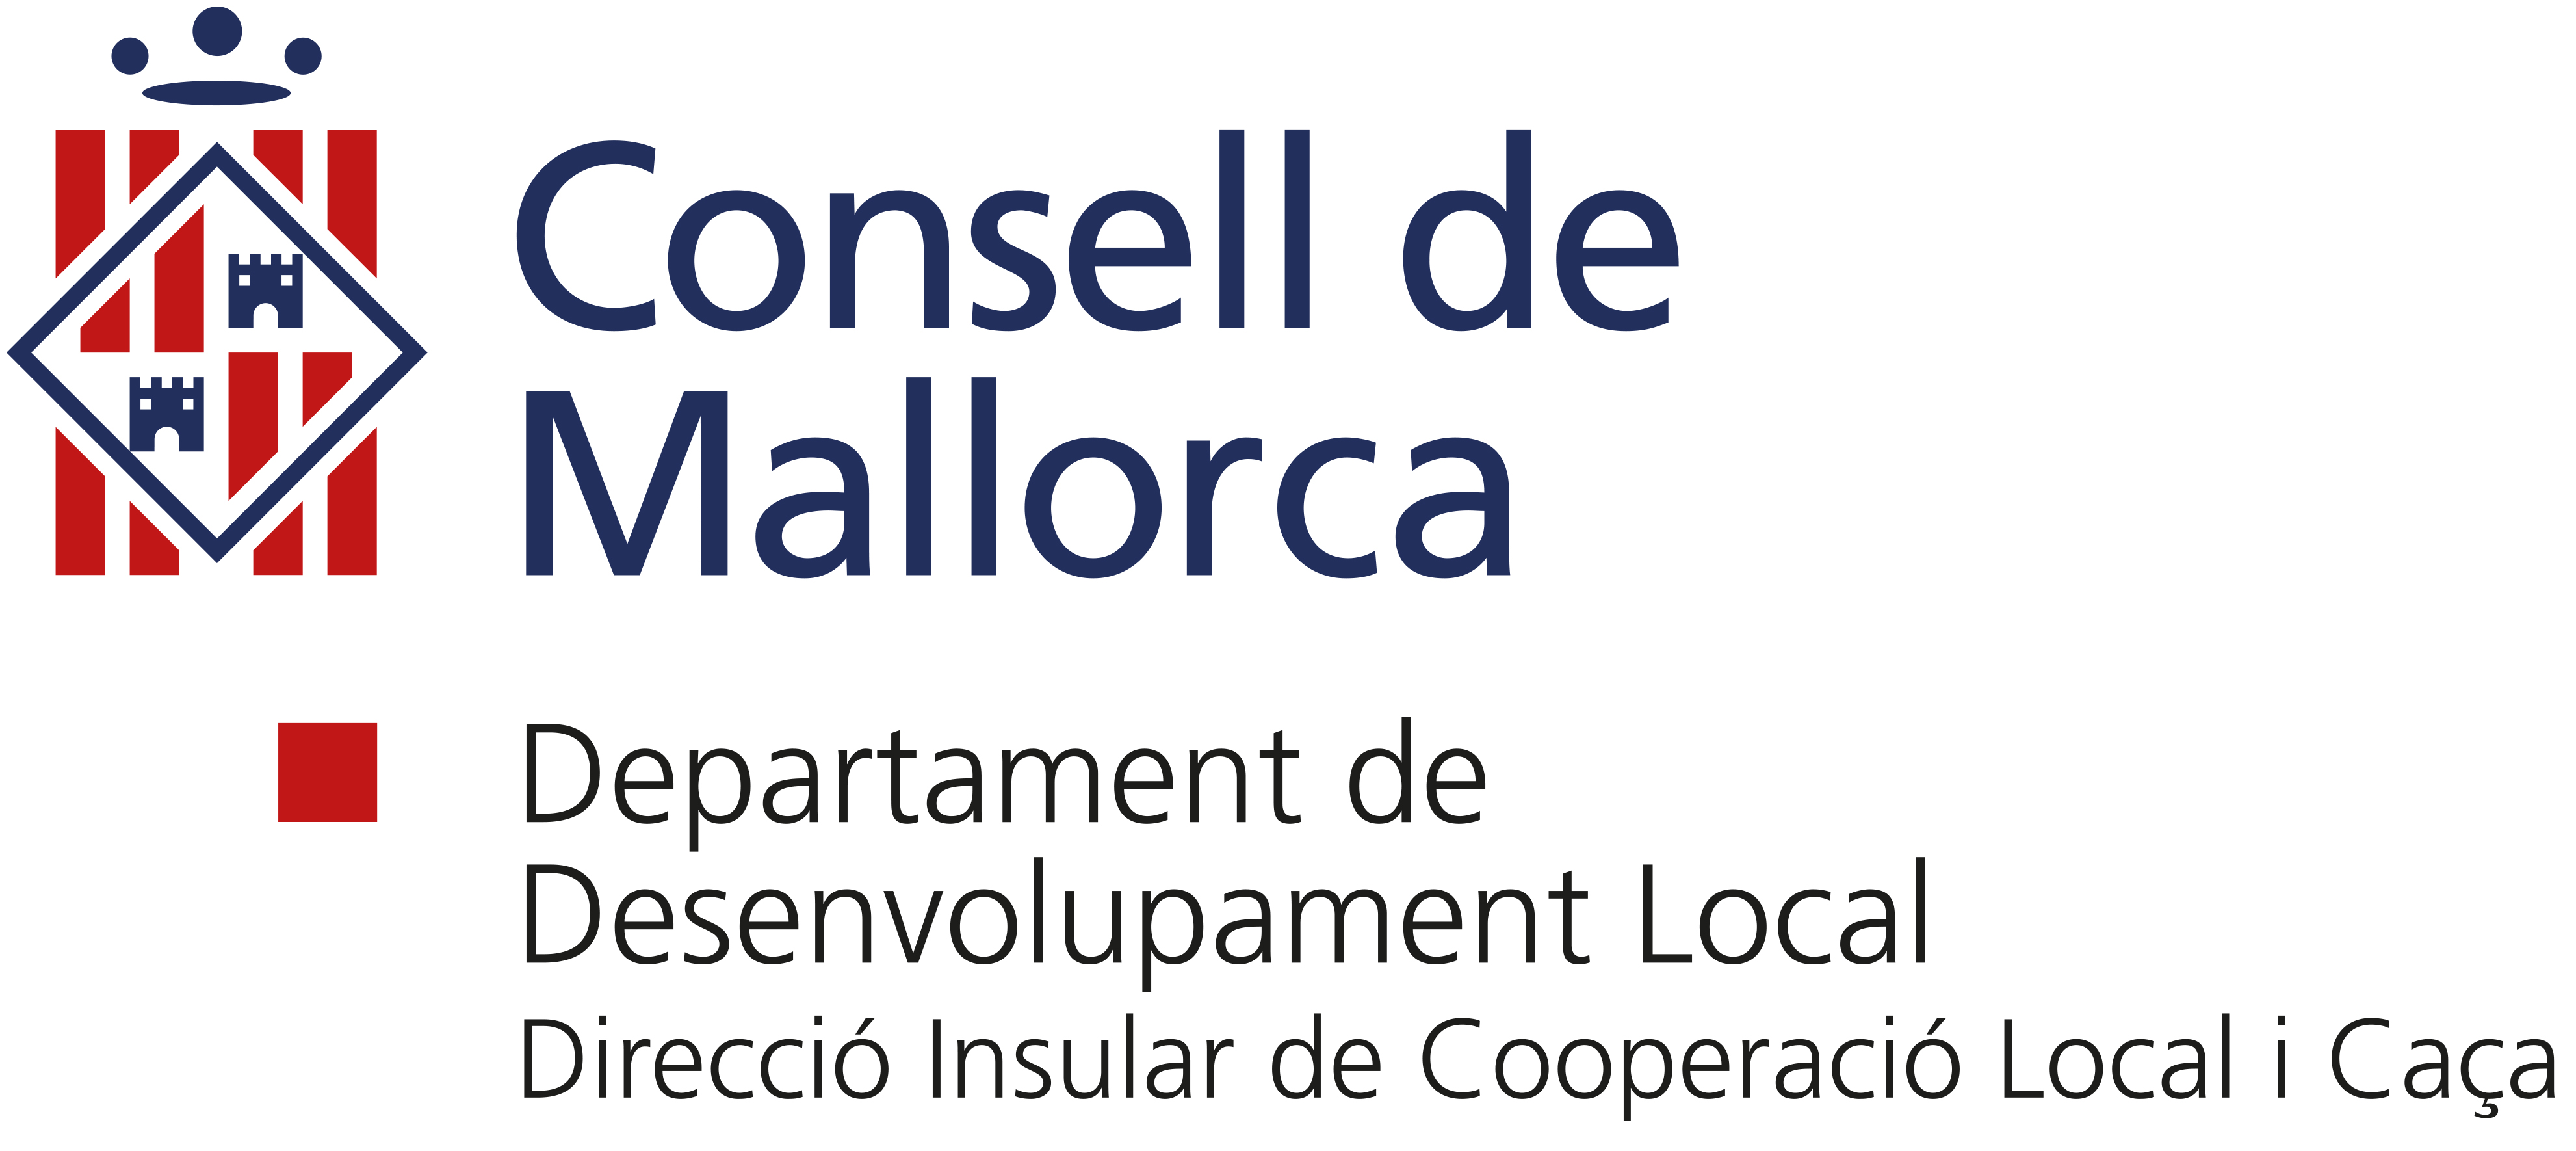 Logo_Cooperacio_color.jpg